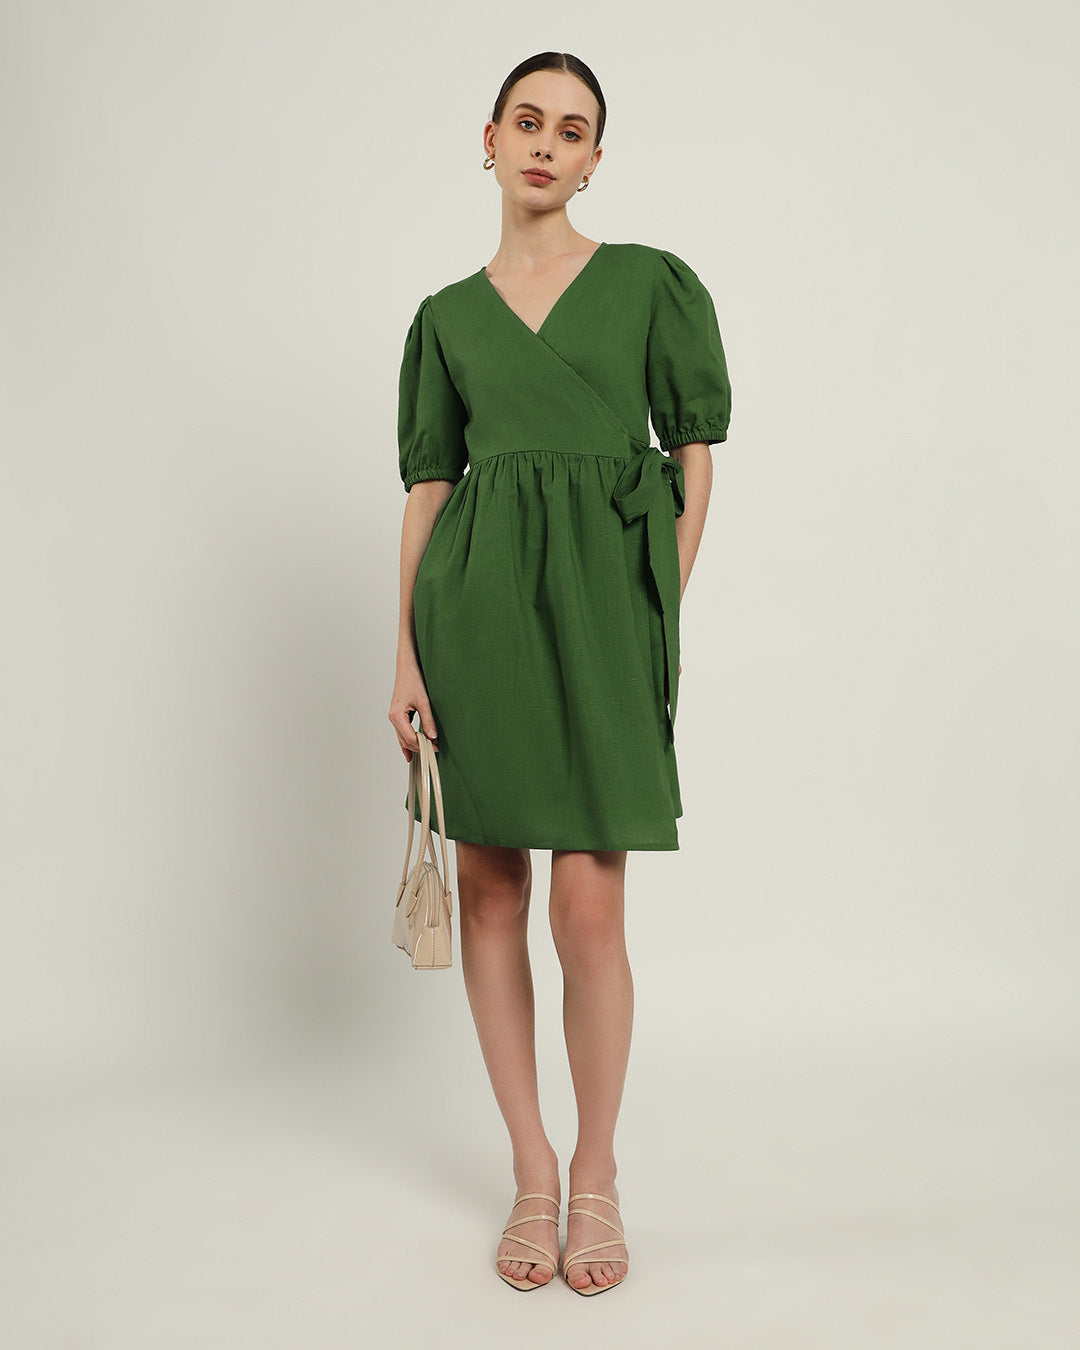 The Inzai Emerald Cotton Dress